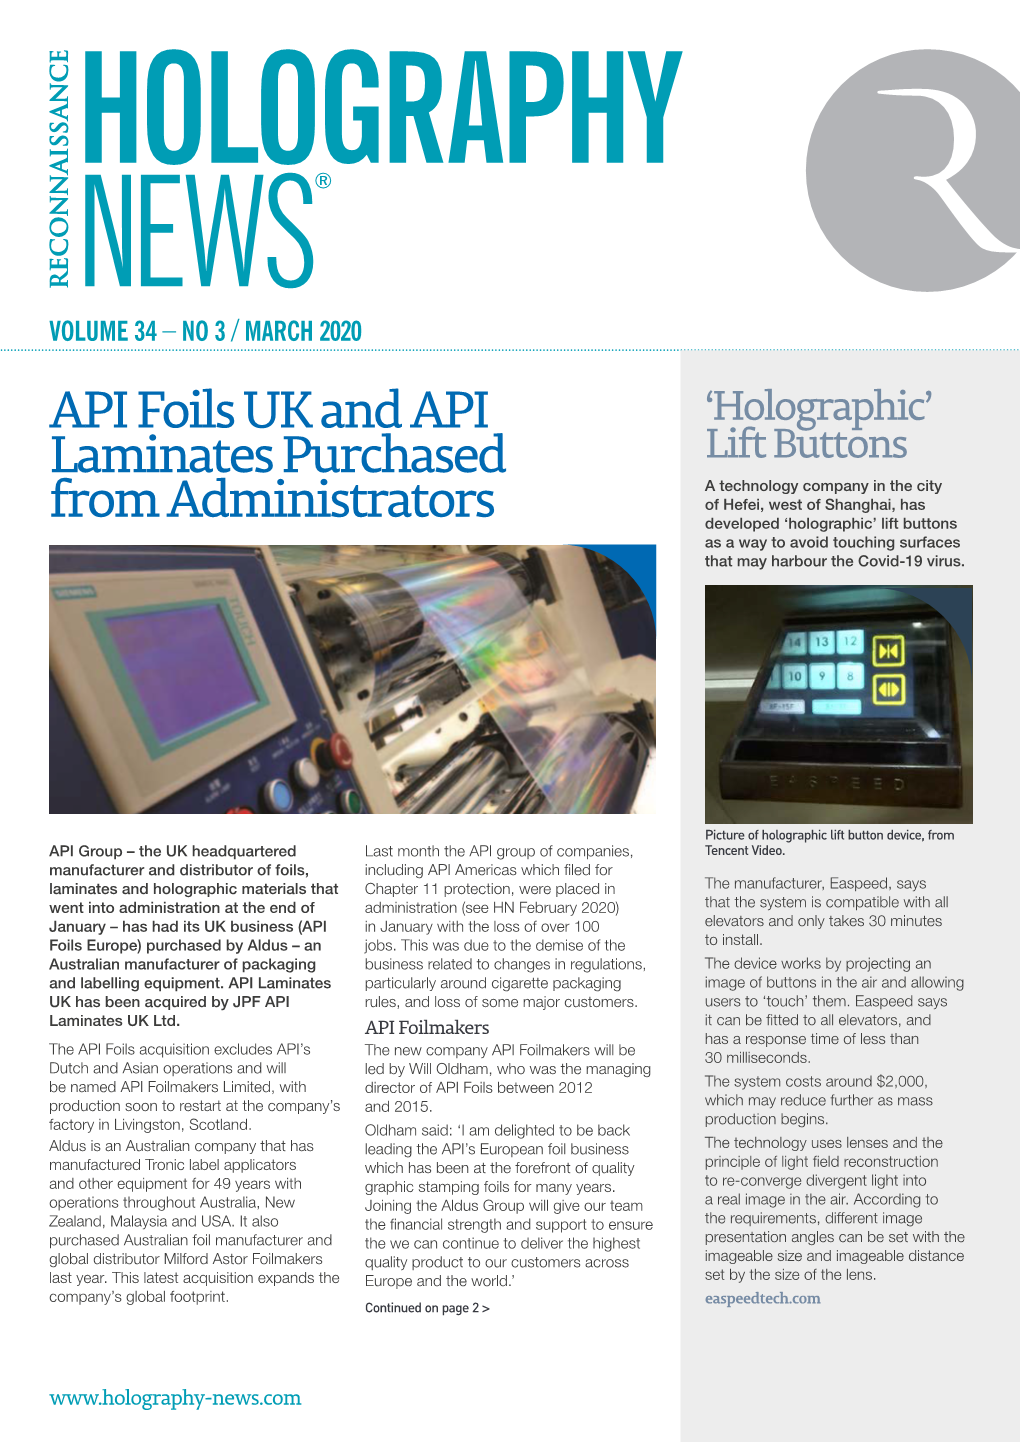 API Foils UK and API Laminates Purchased from Administrators